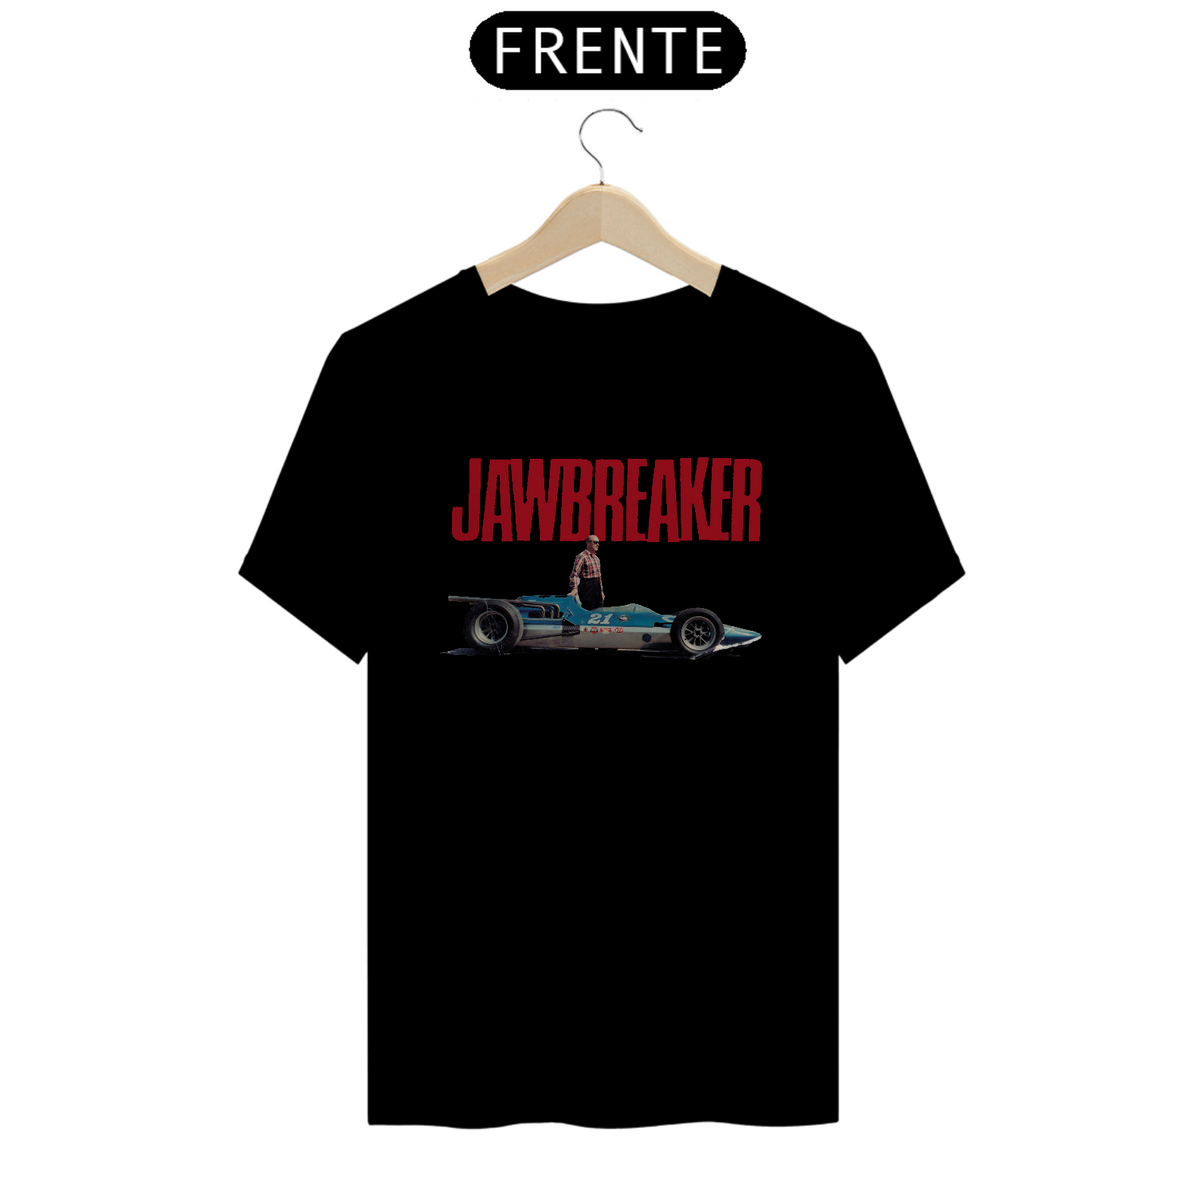 Nome do produto: Jawbreaker